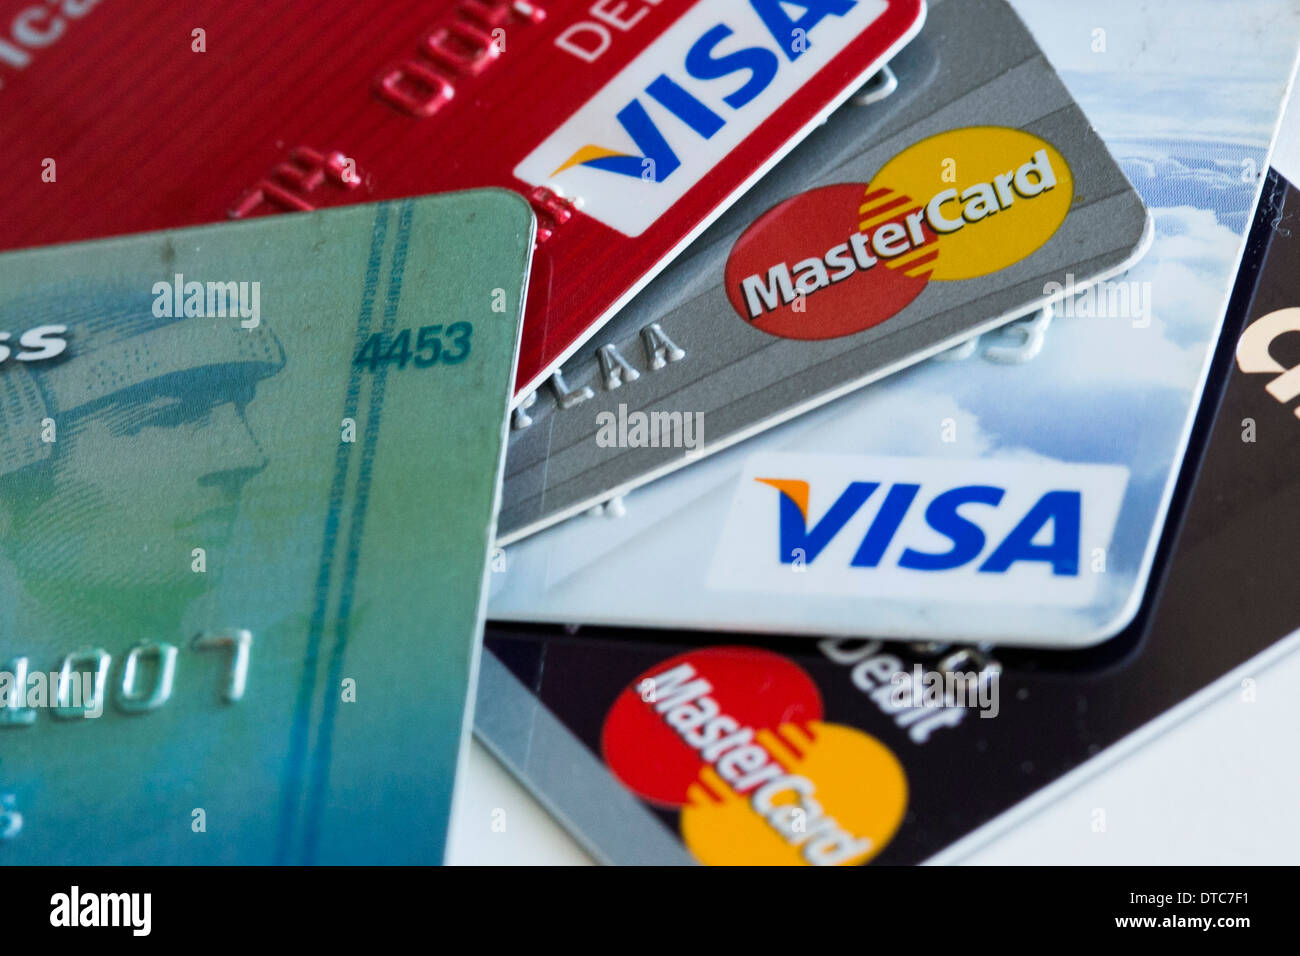 Visa Mastercard Immagini e Fotos Stock - Alamy